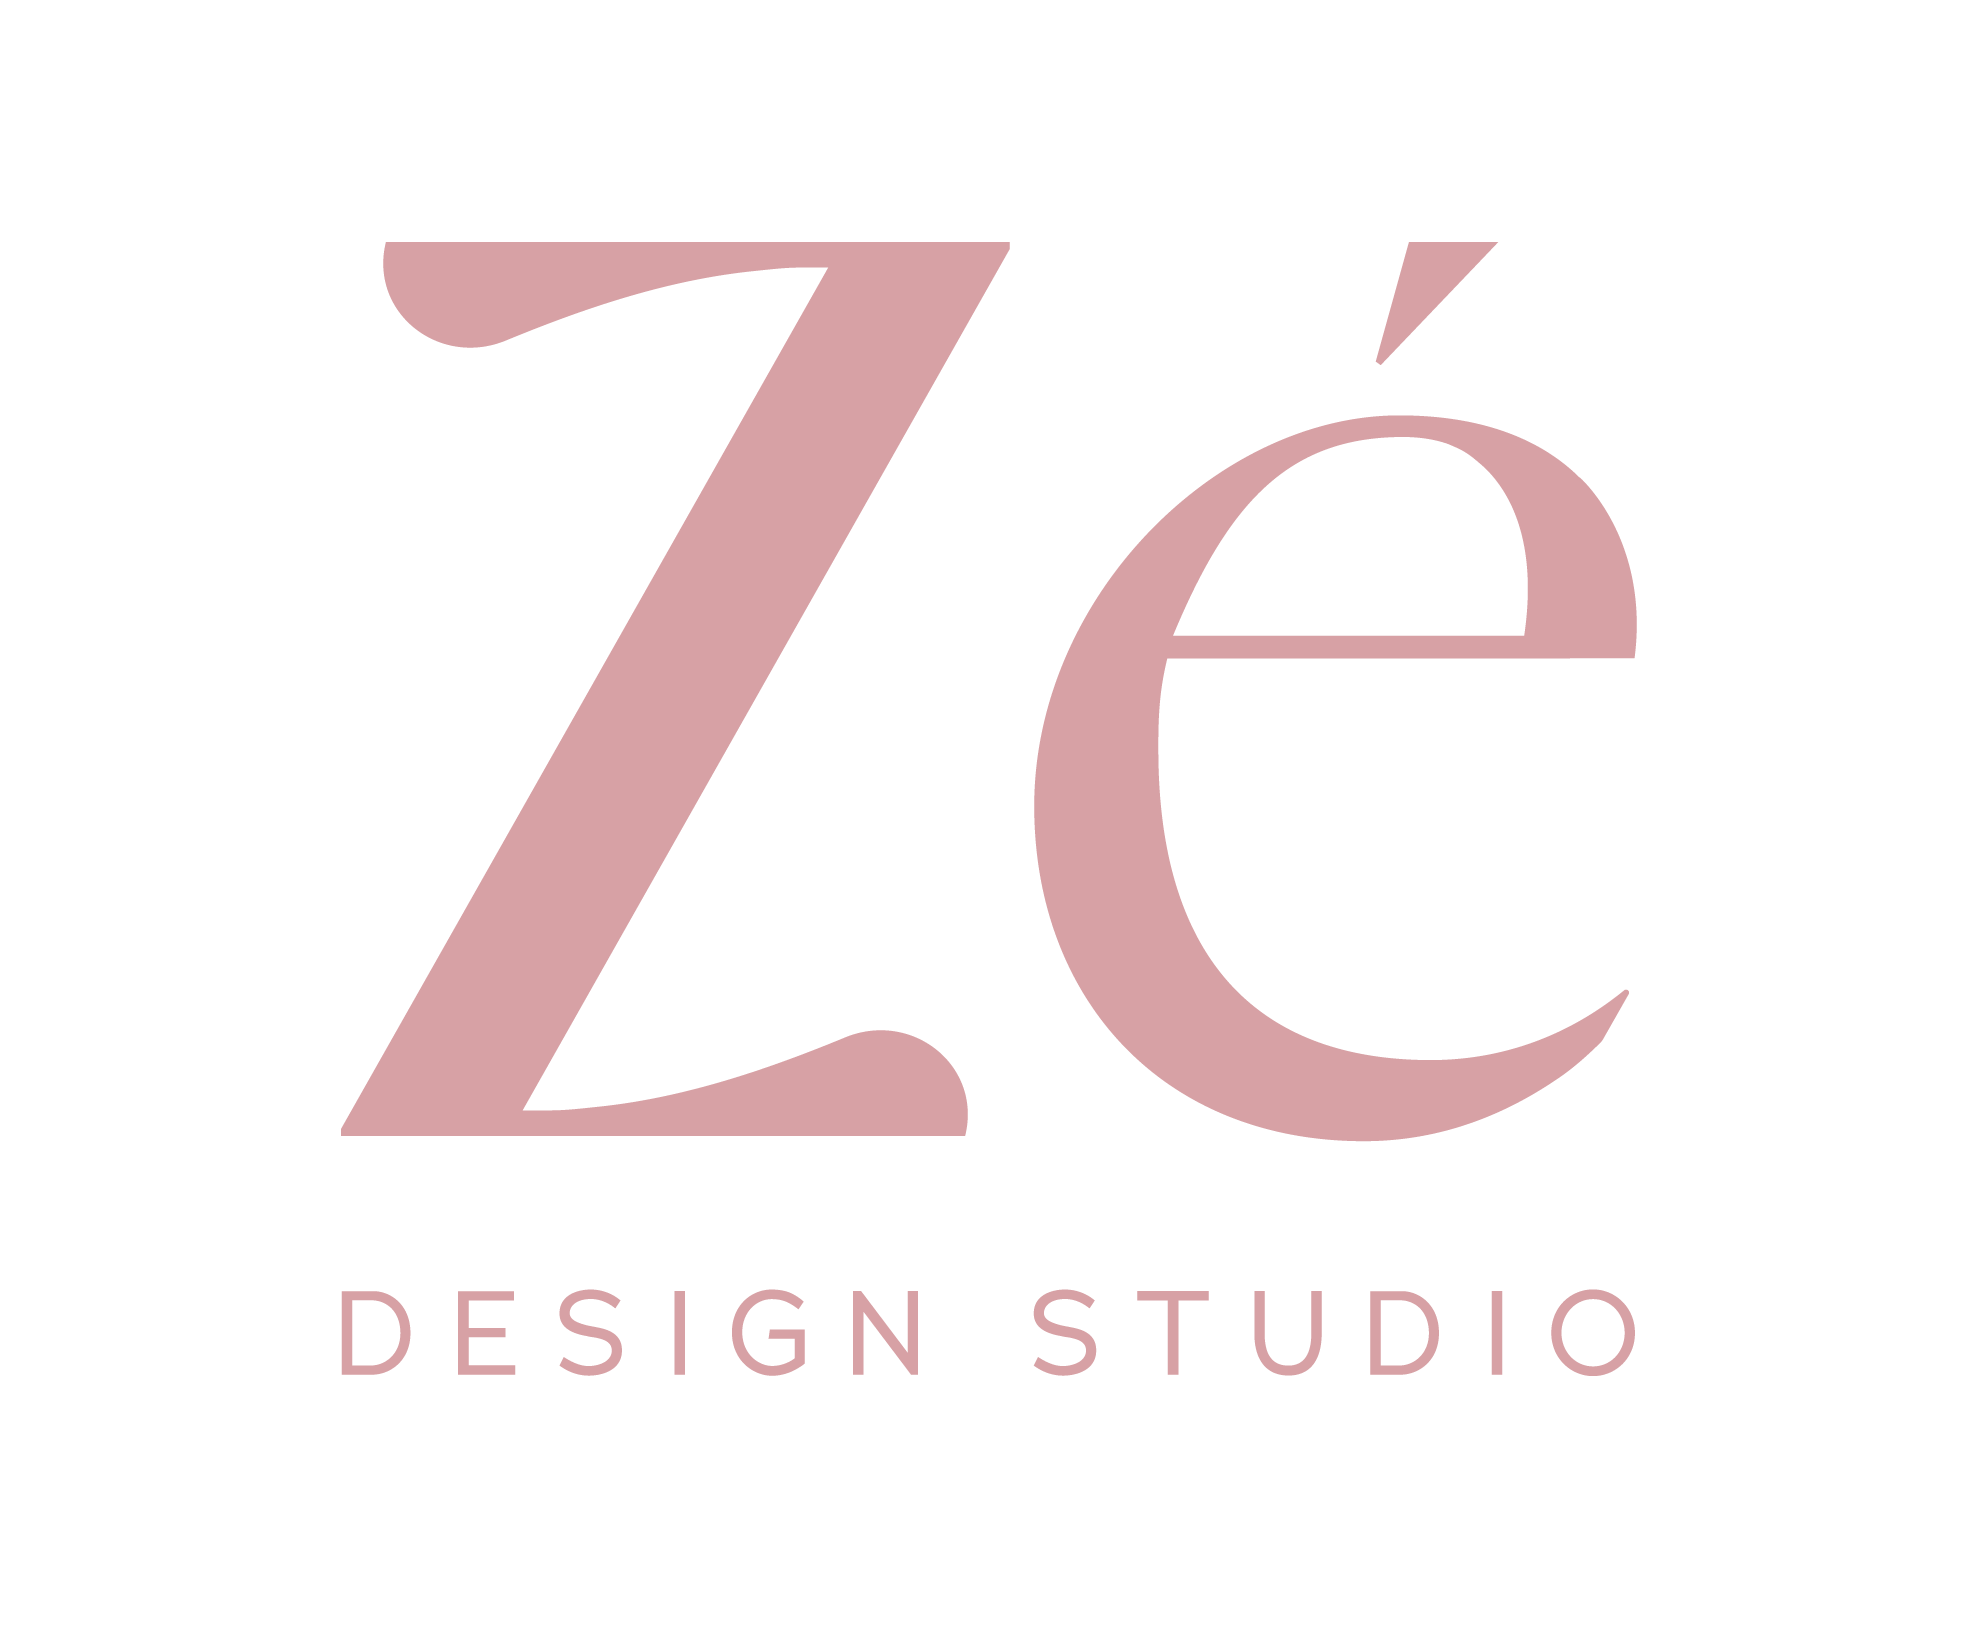 Zé Design Studio Logo